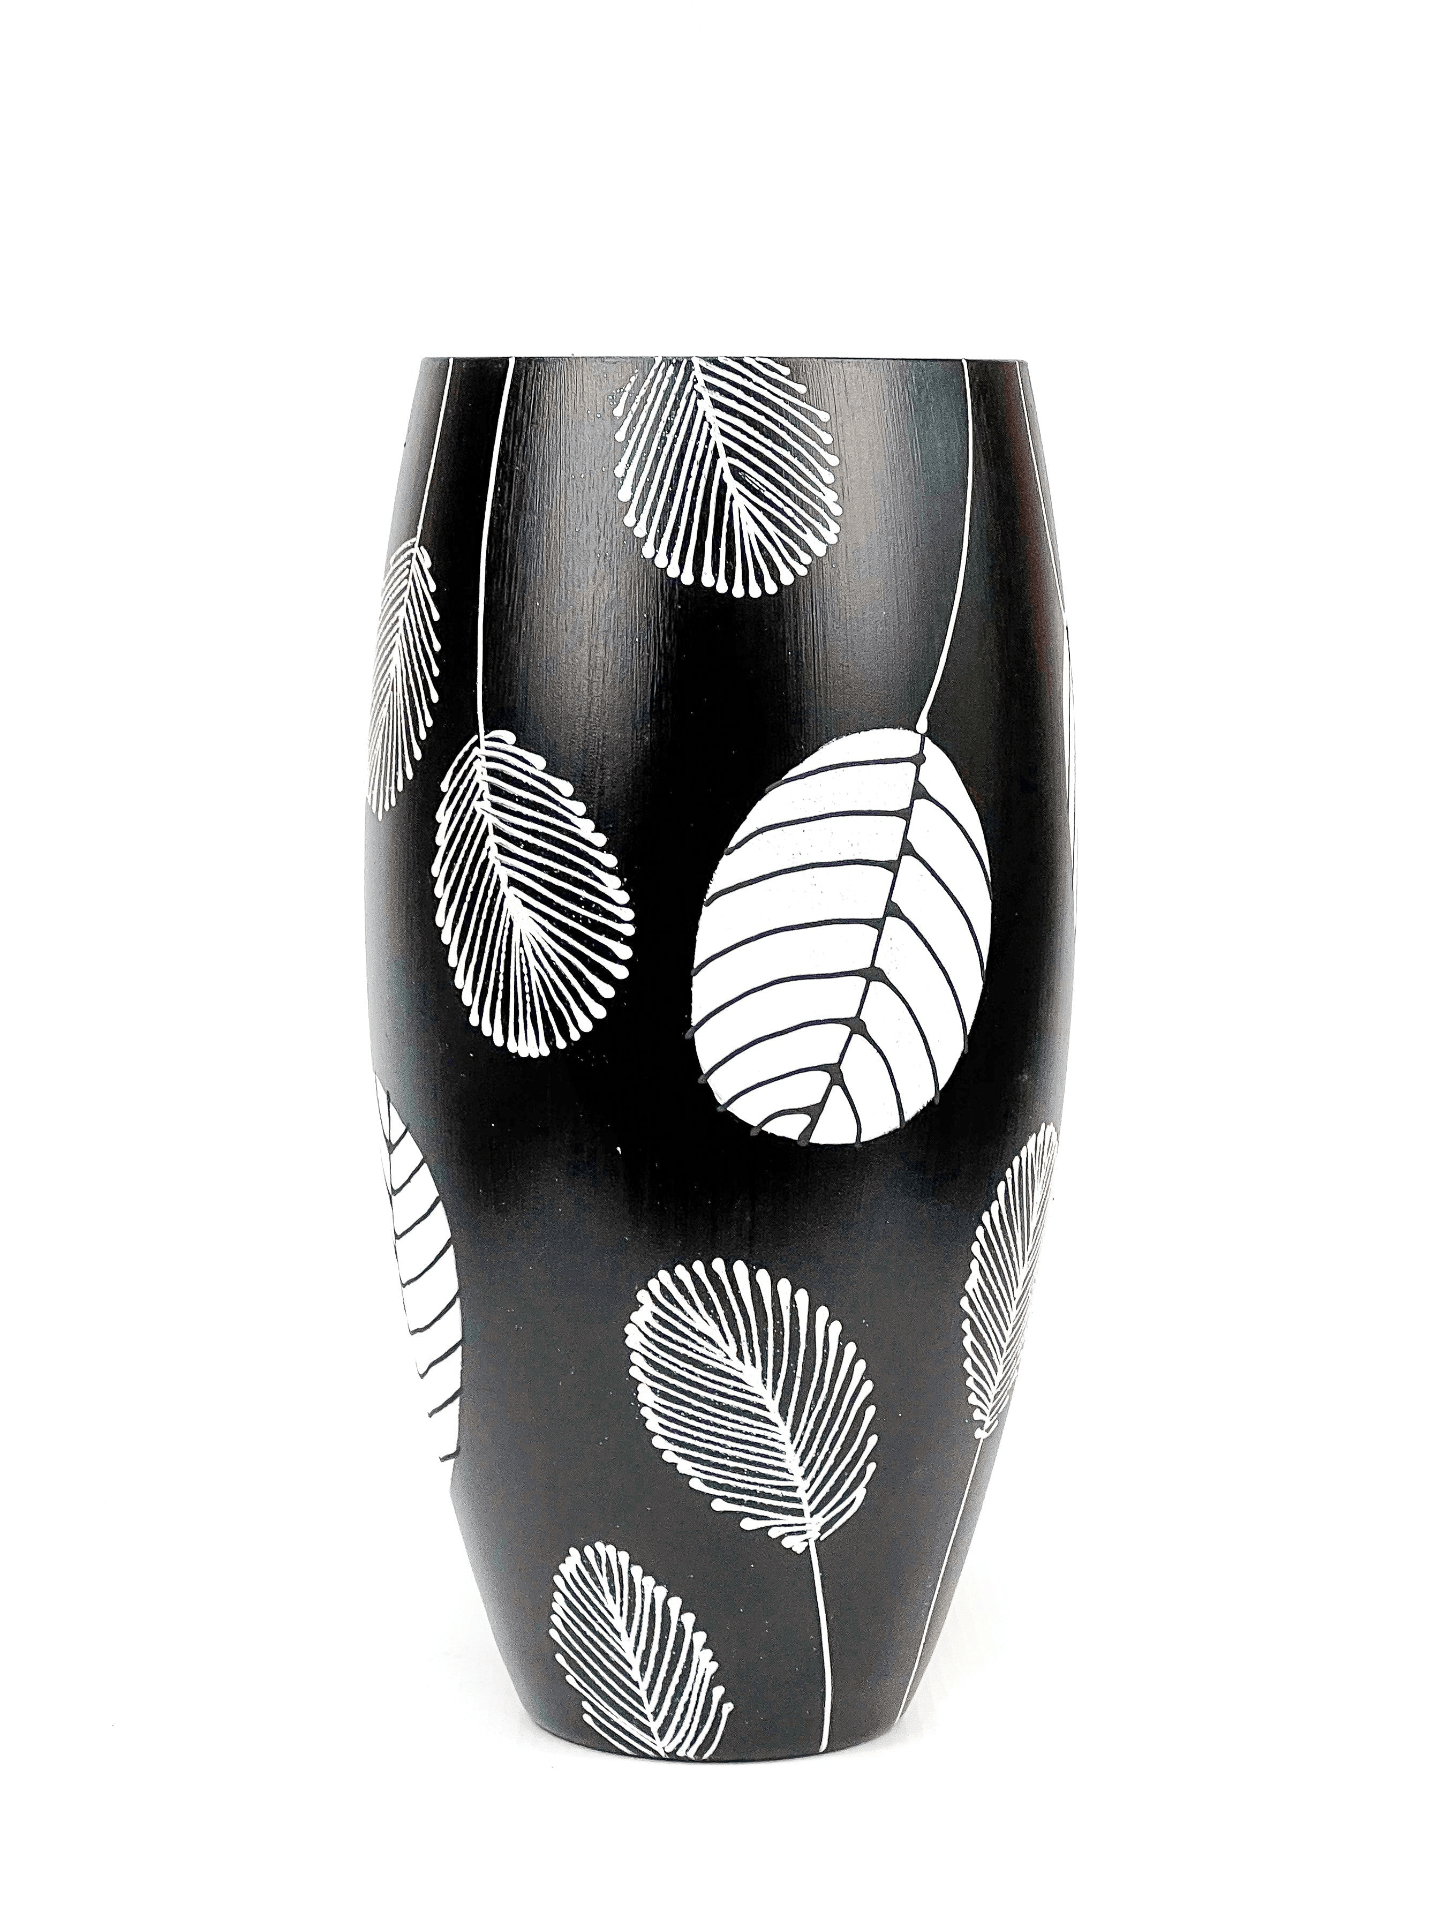 Art decorative glass vase 7518/300/sh104.3  